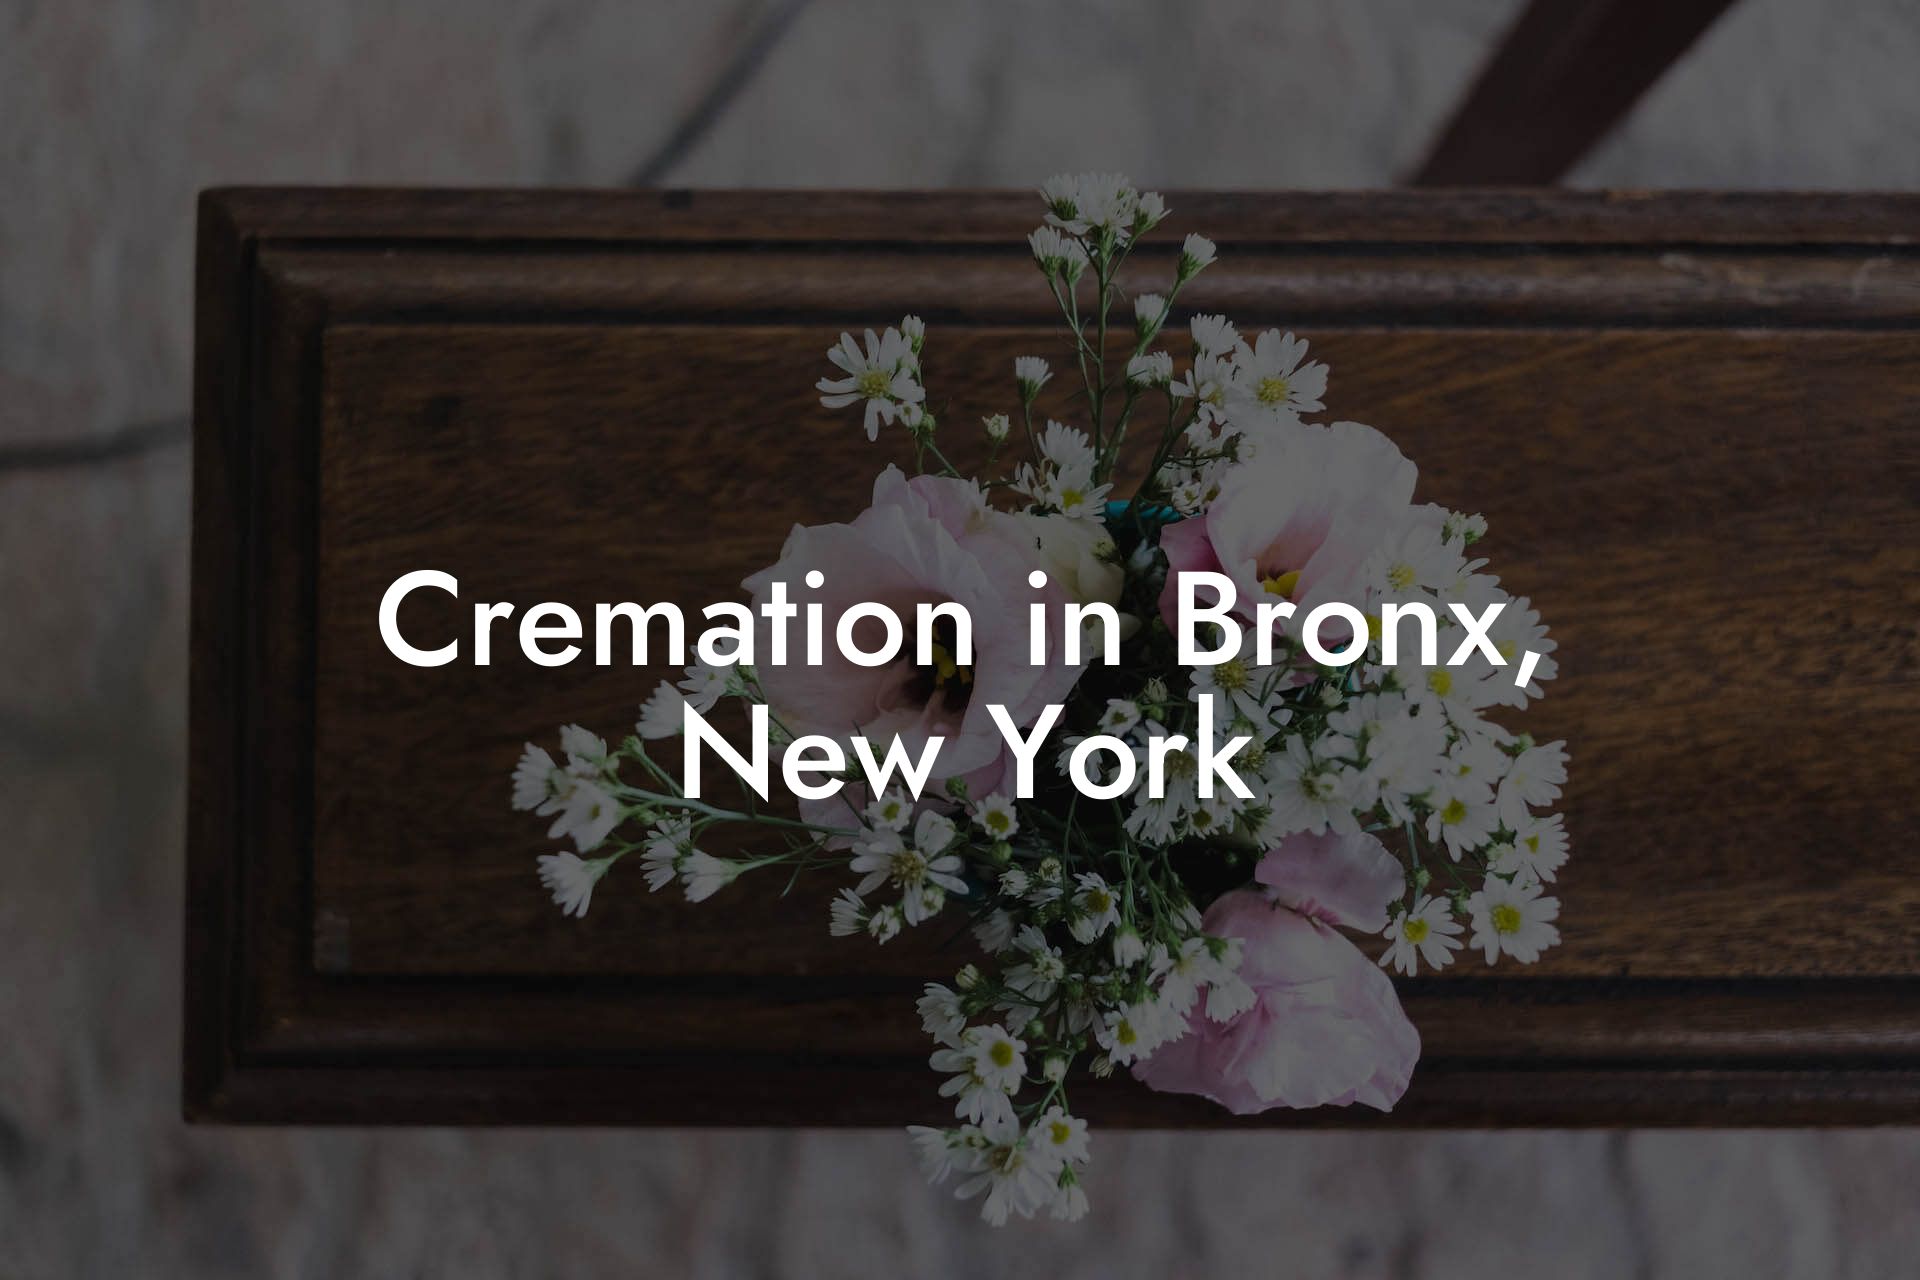 Cremation in Bronx, New York